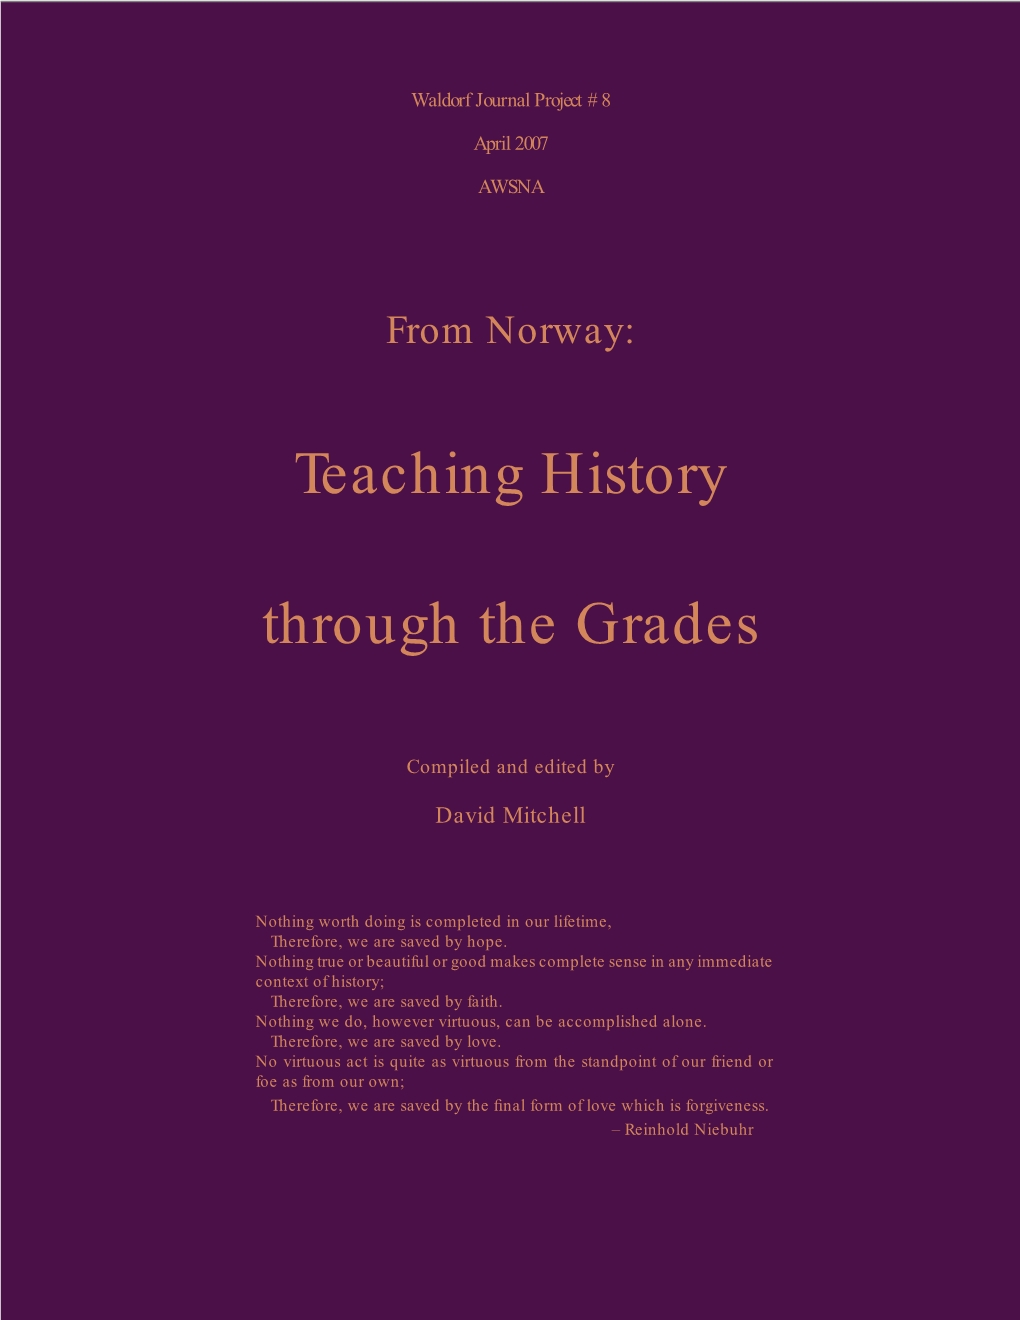 Teaching History Through the Grades